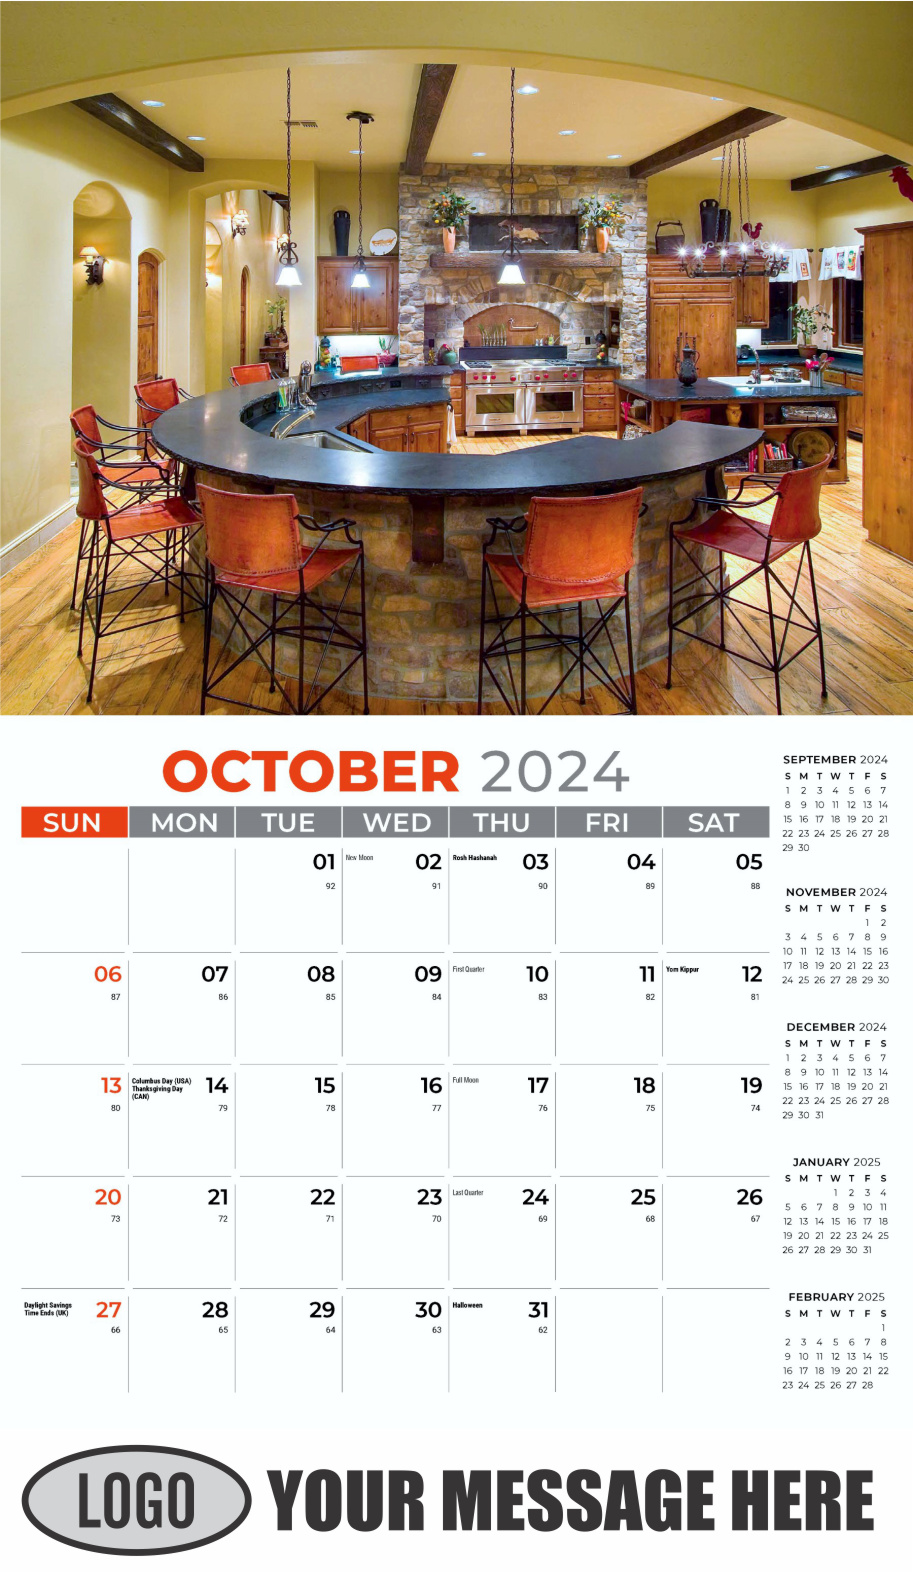 Decor and Design 2024 Interior Design Business Promotional Calendar - October